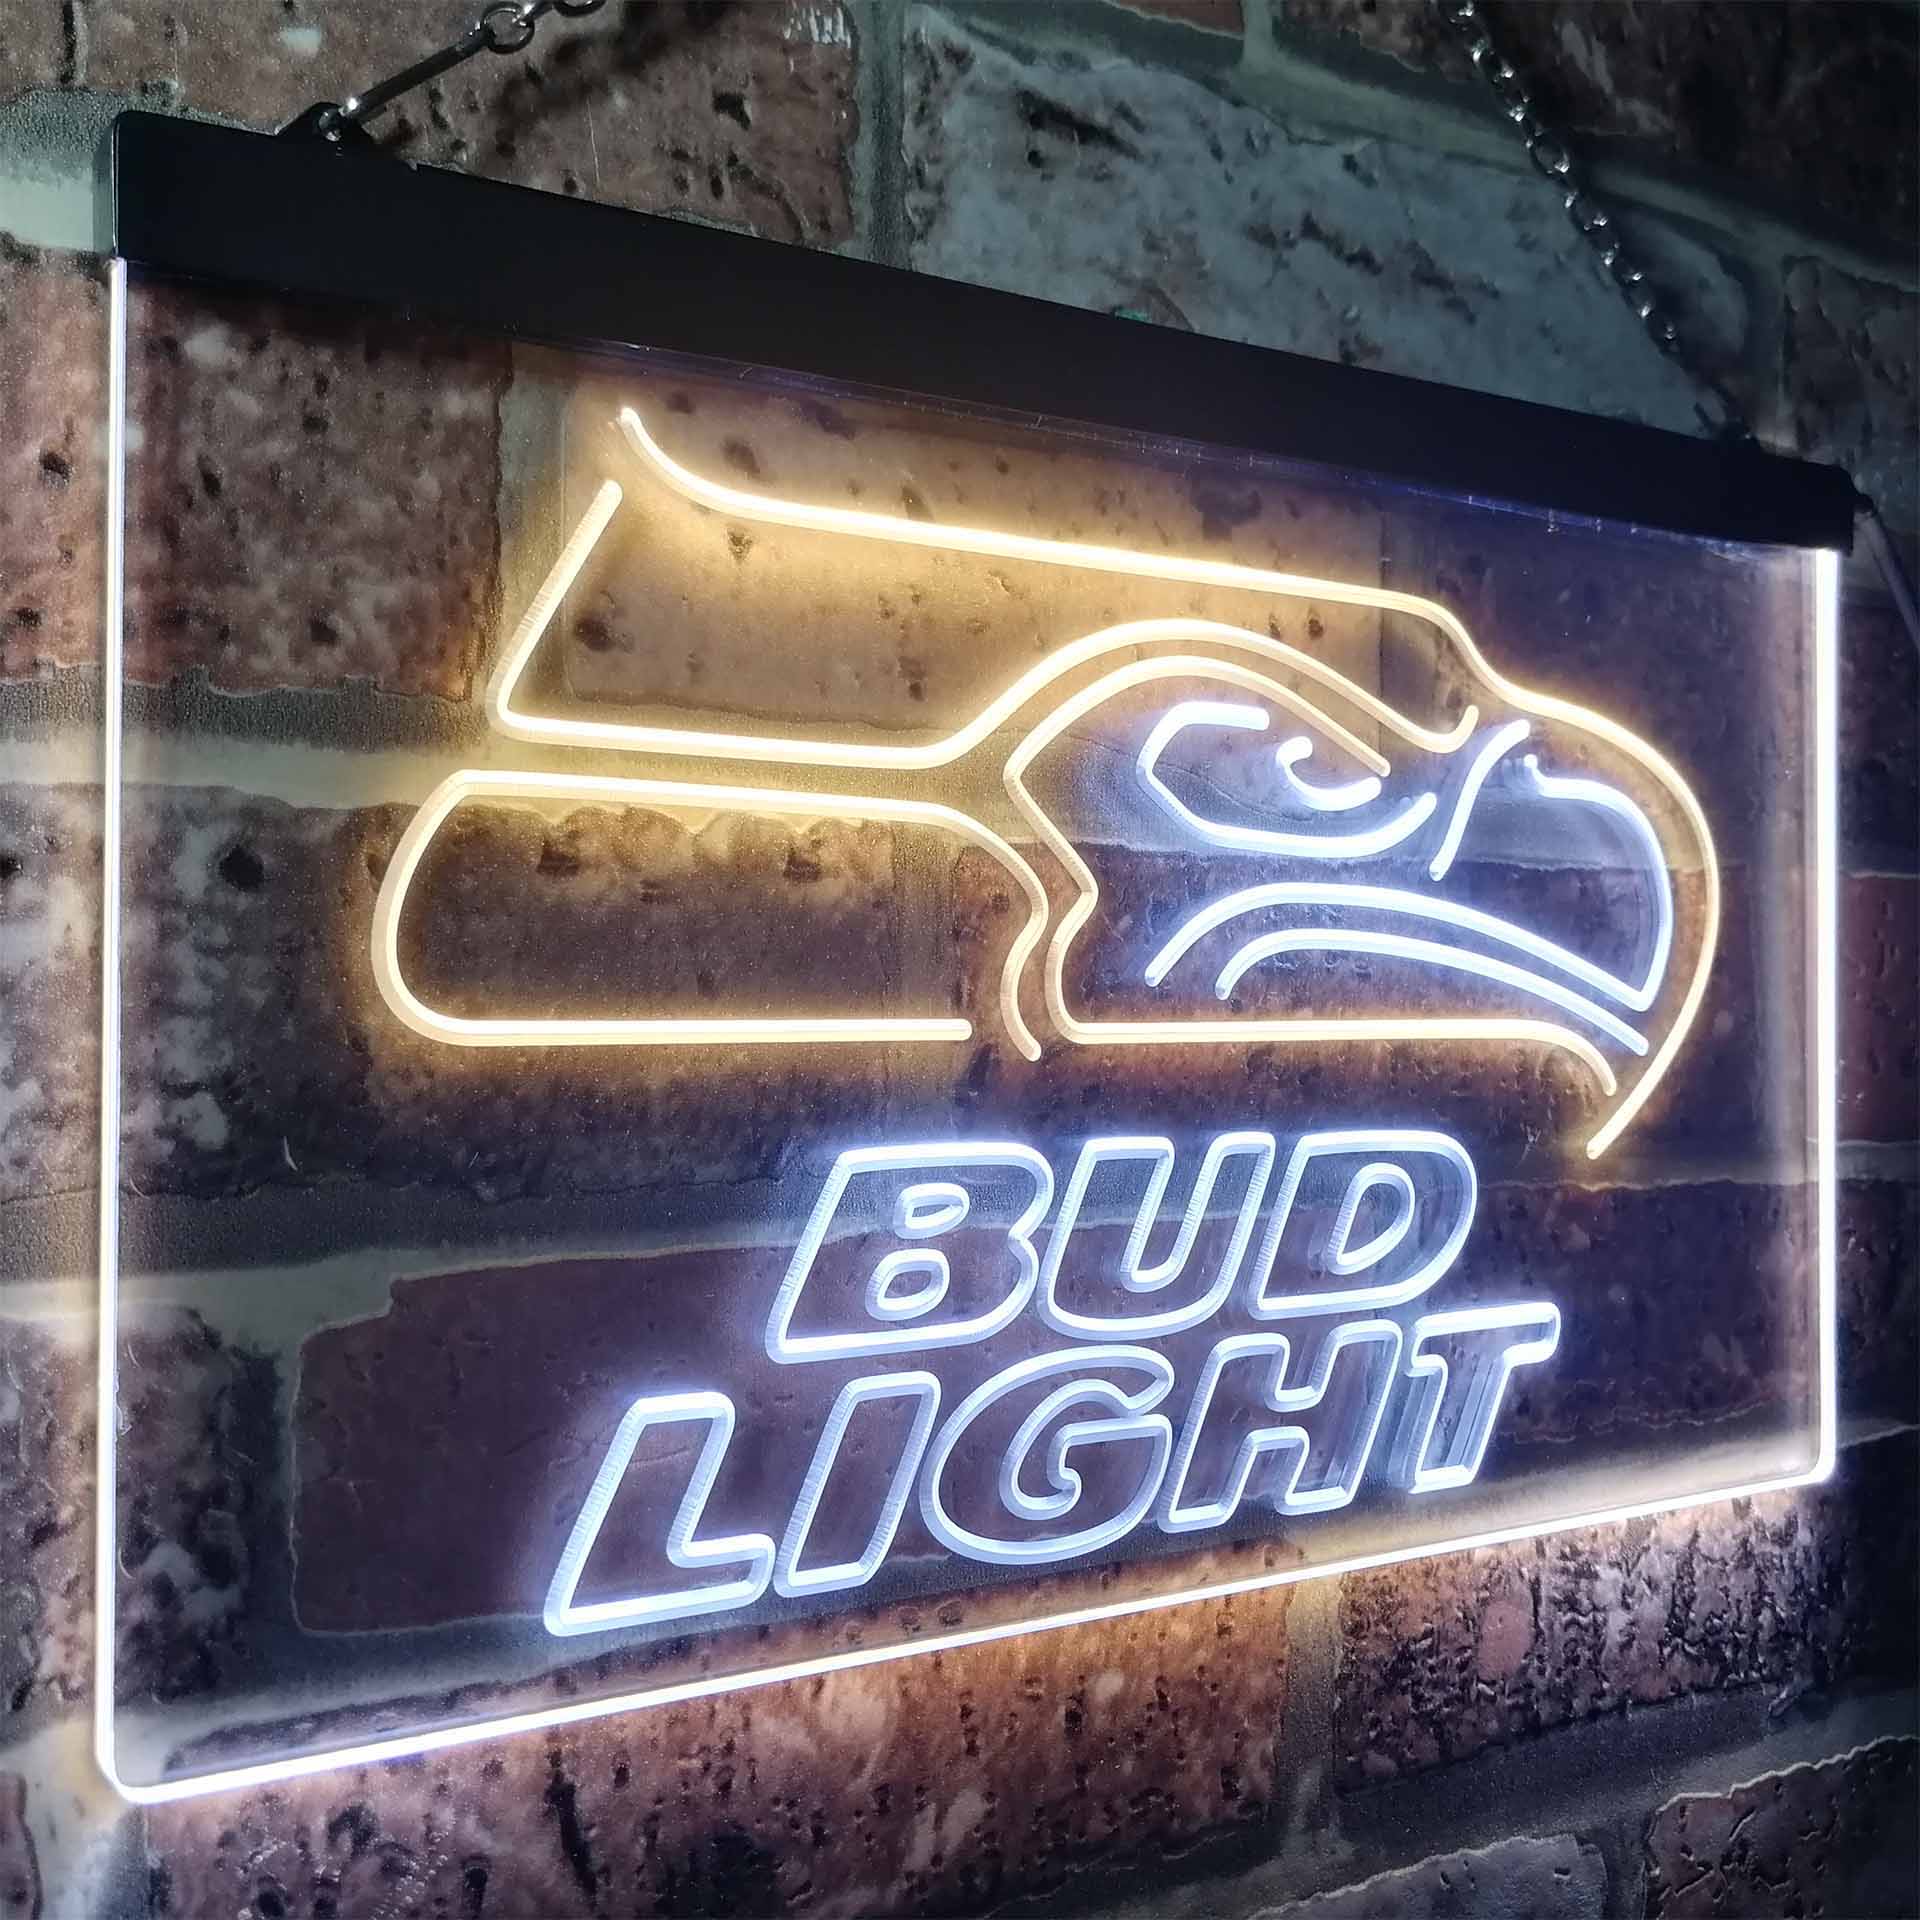 Seattle Seahawks Bud Light LED Neon Sign